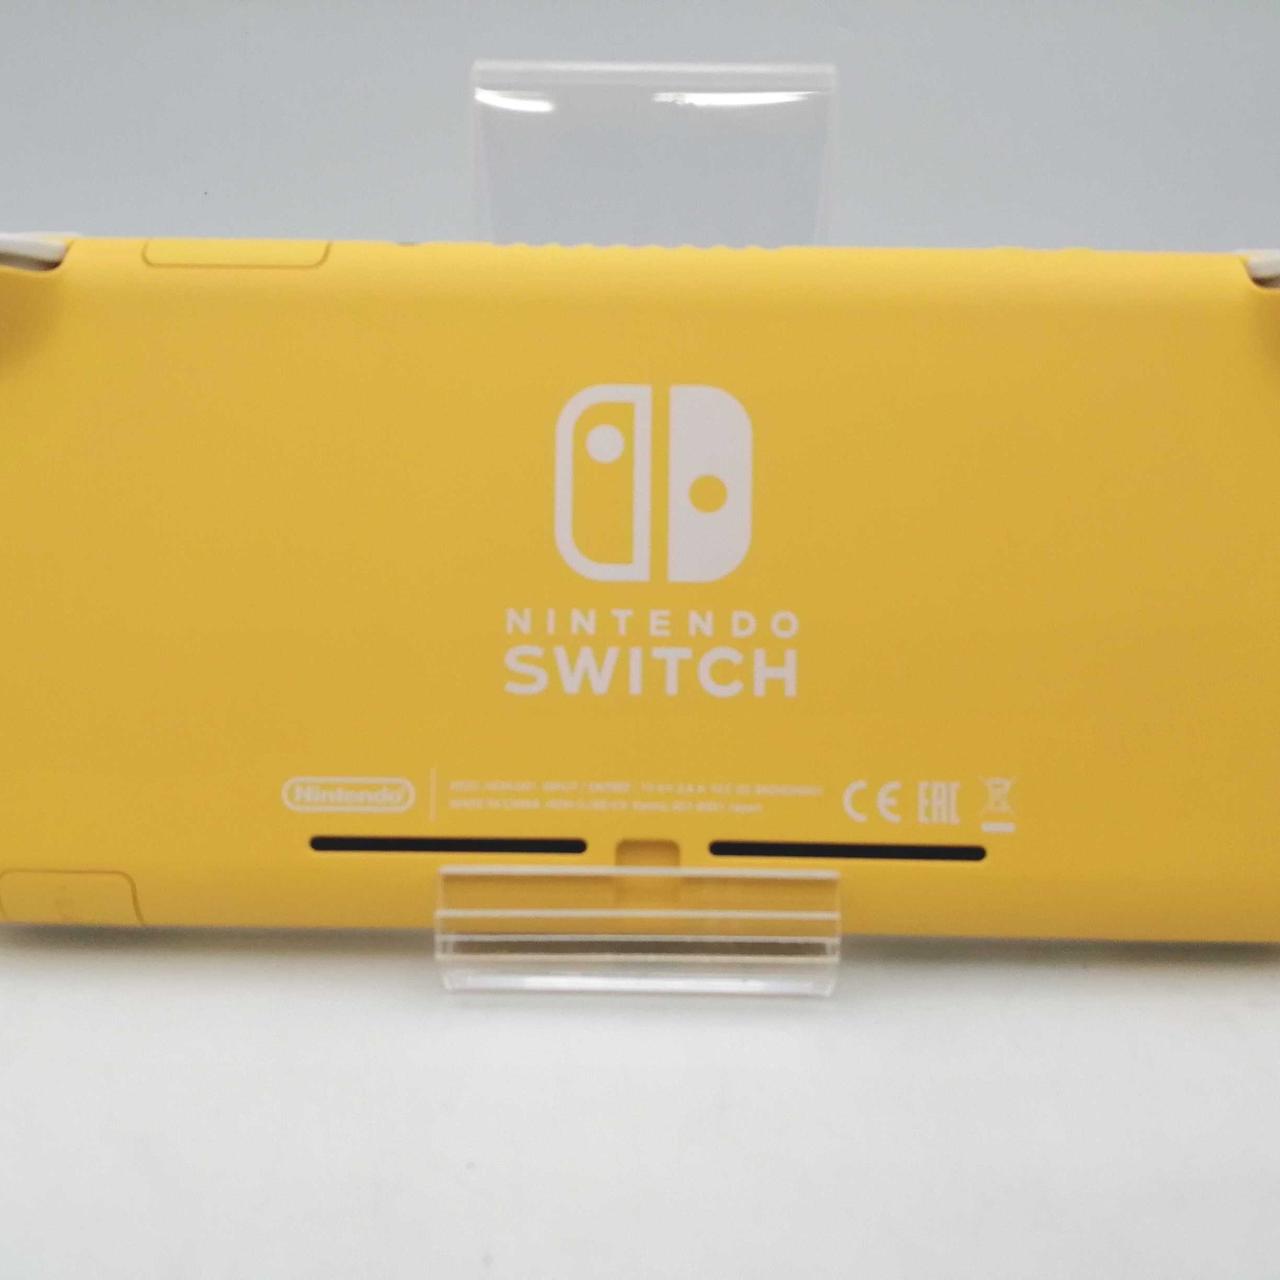 Nintendo HDH-001 Switch Lite Yellow w/Box Used in Japan